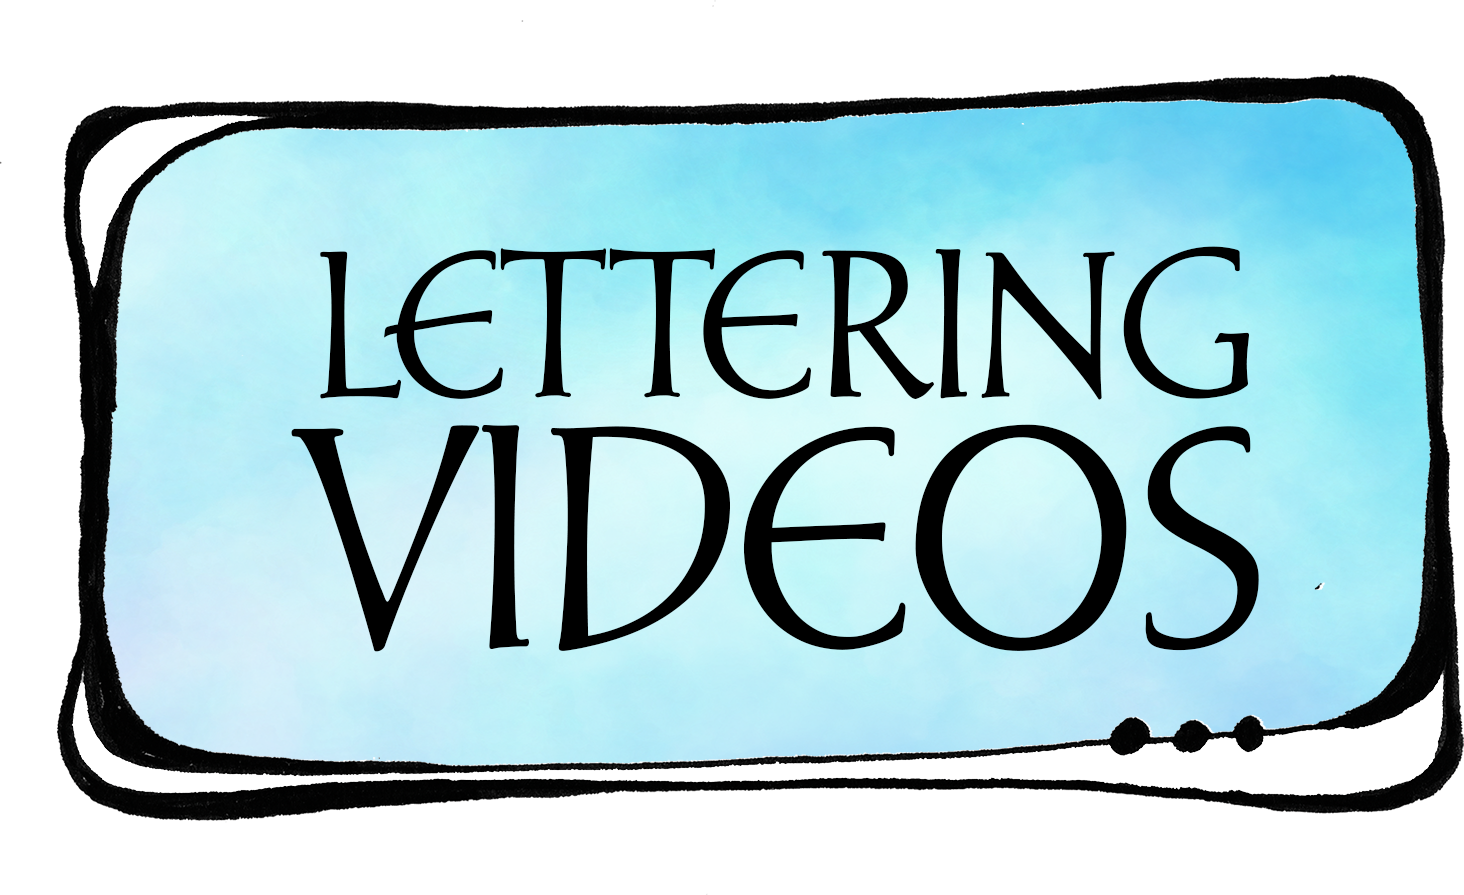 Lettering Videos